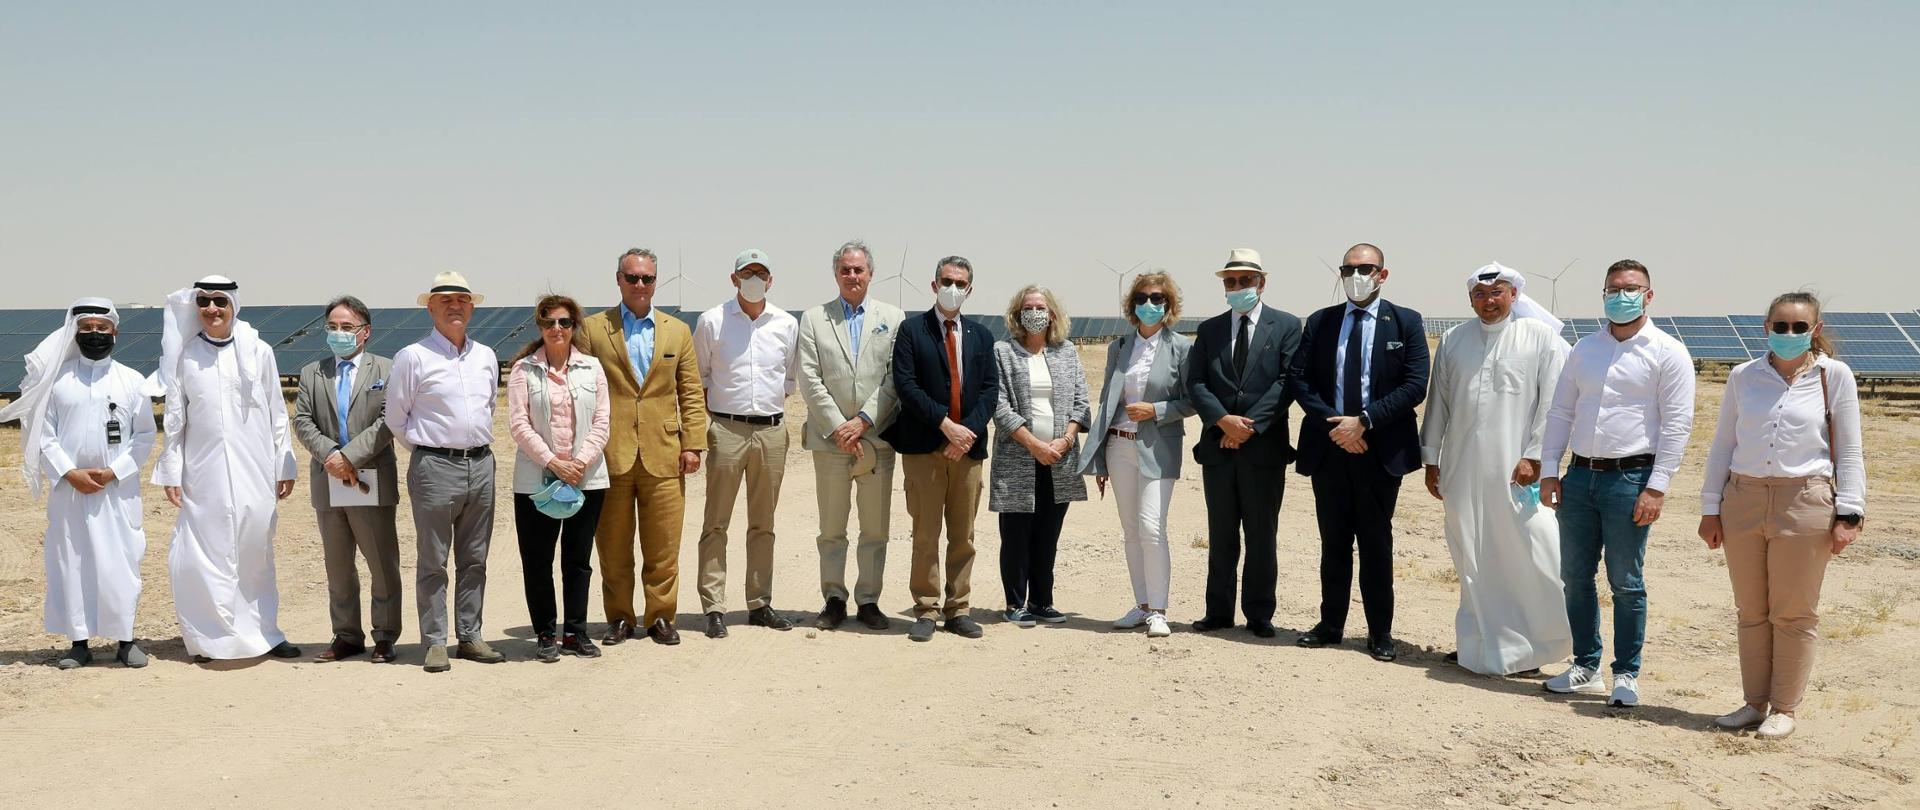 wizyta dyplomatów w Al-Shagaya Renewable Energy Park
